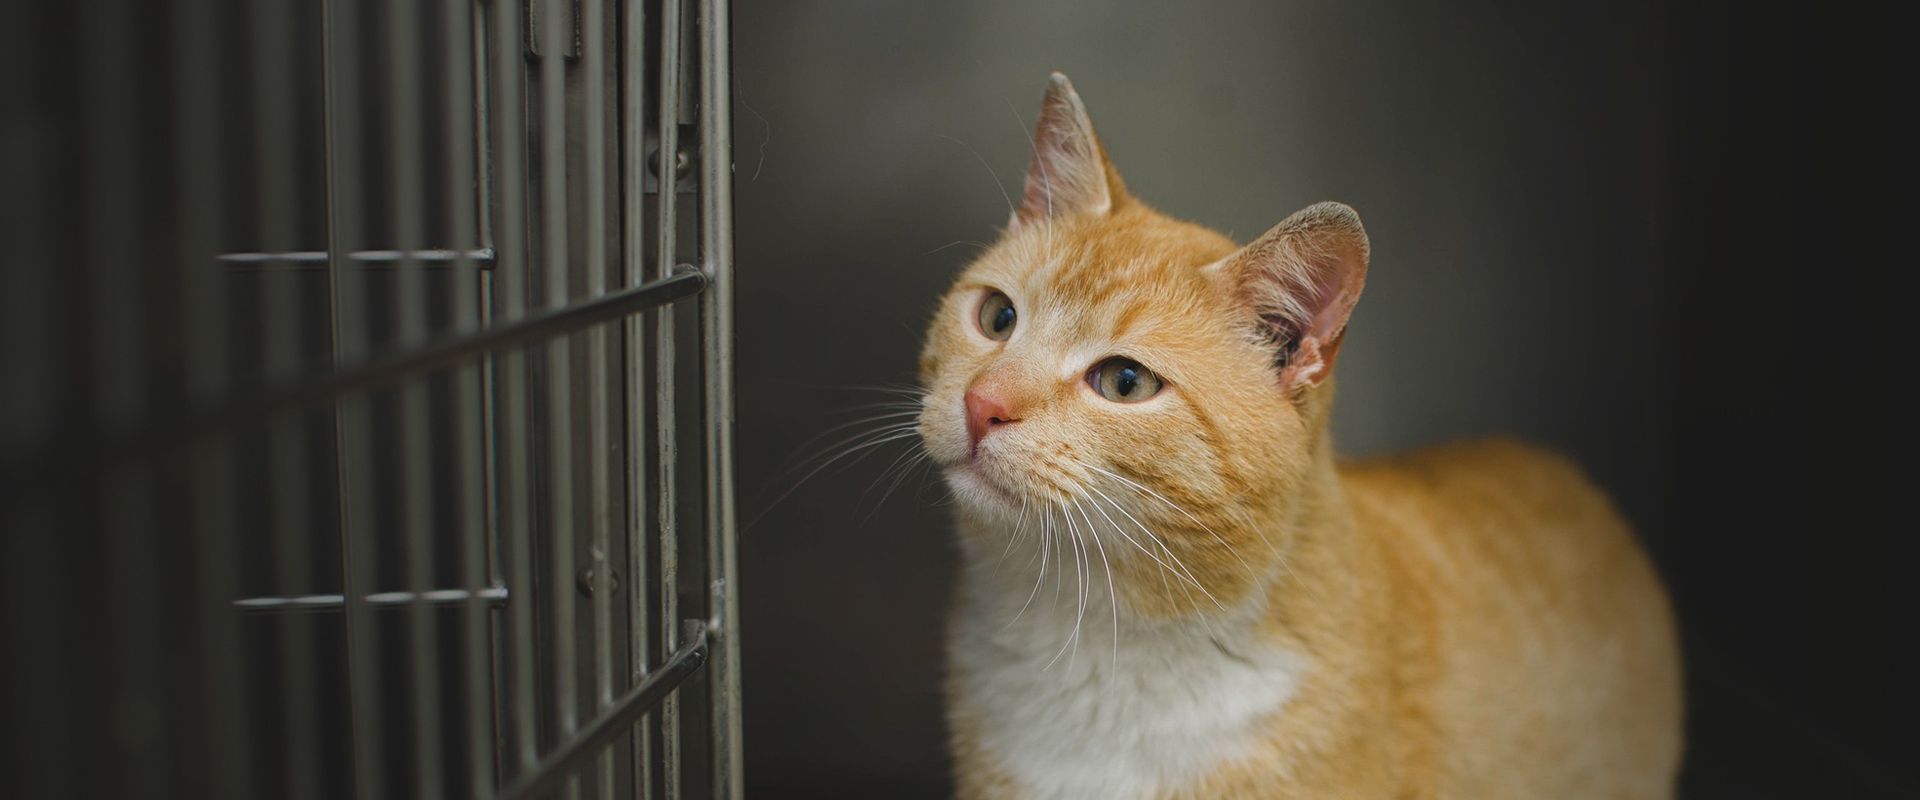 Orange cat outside of a kennel.